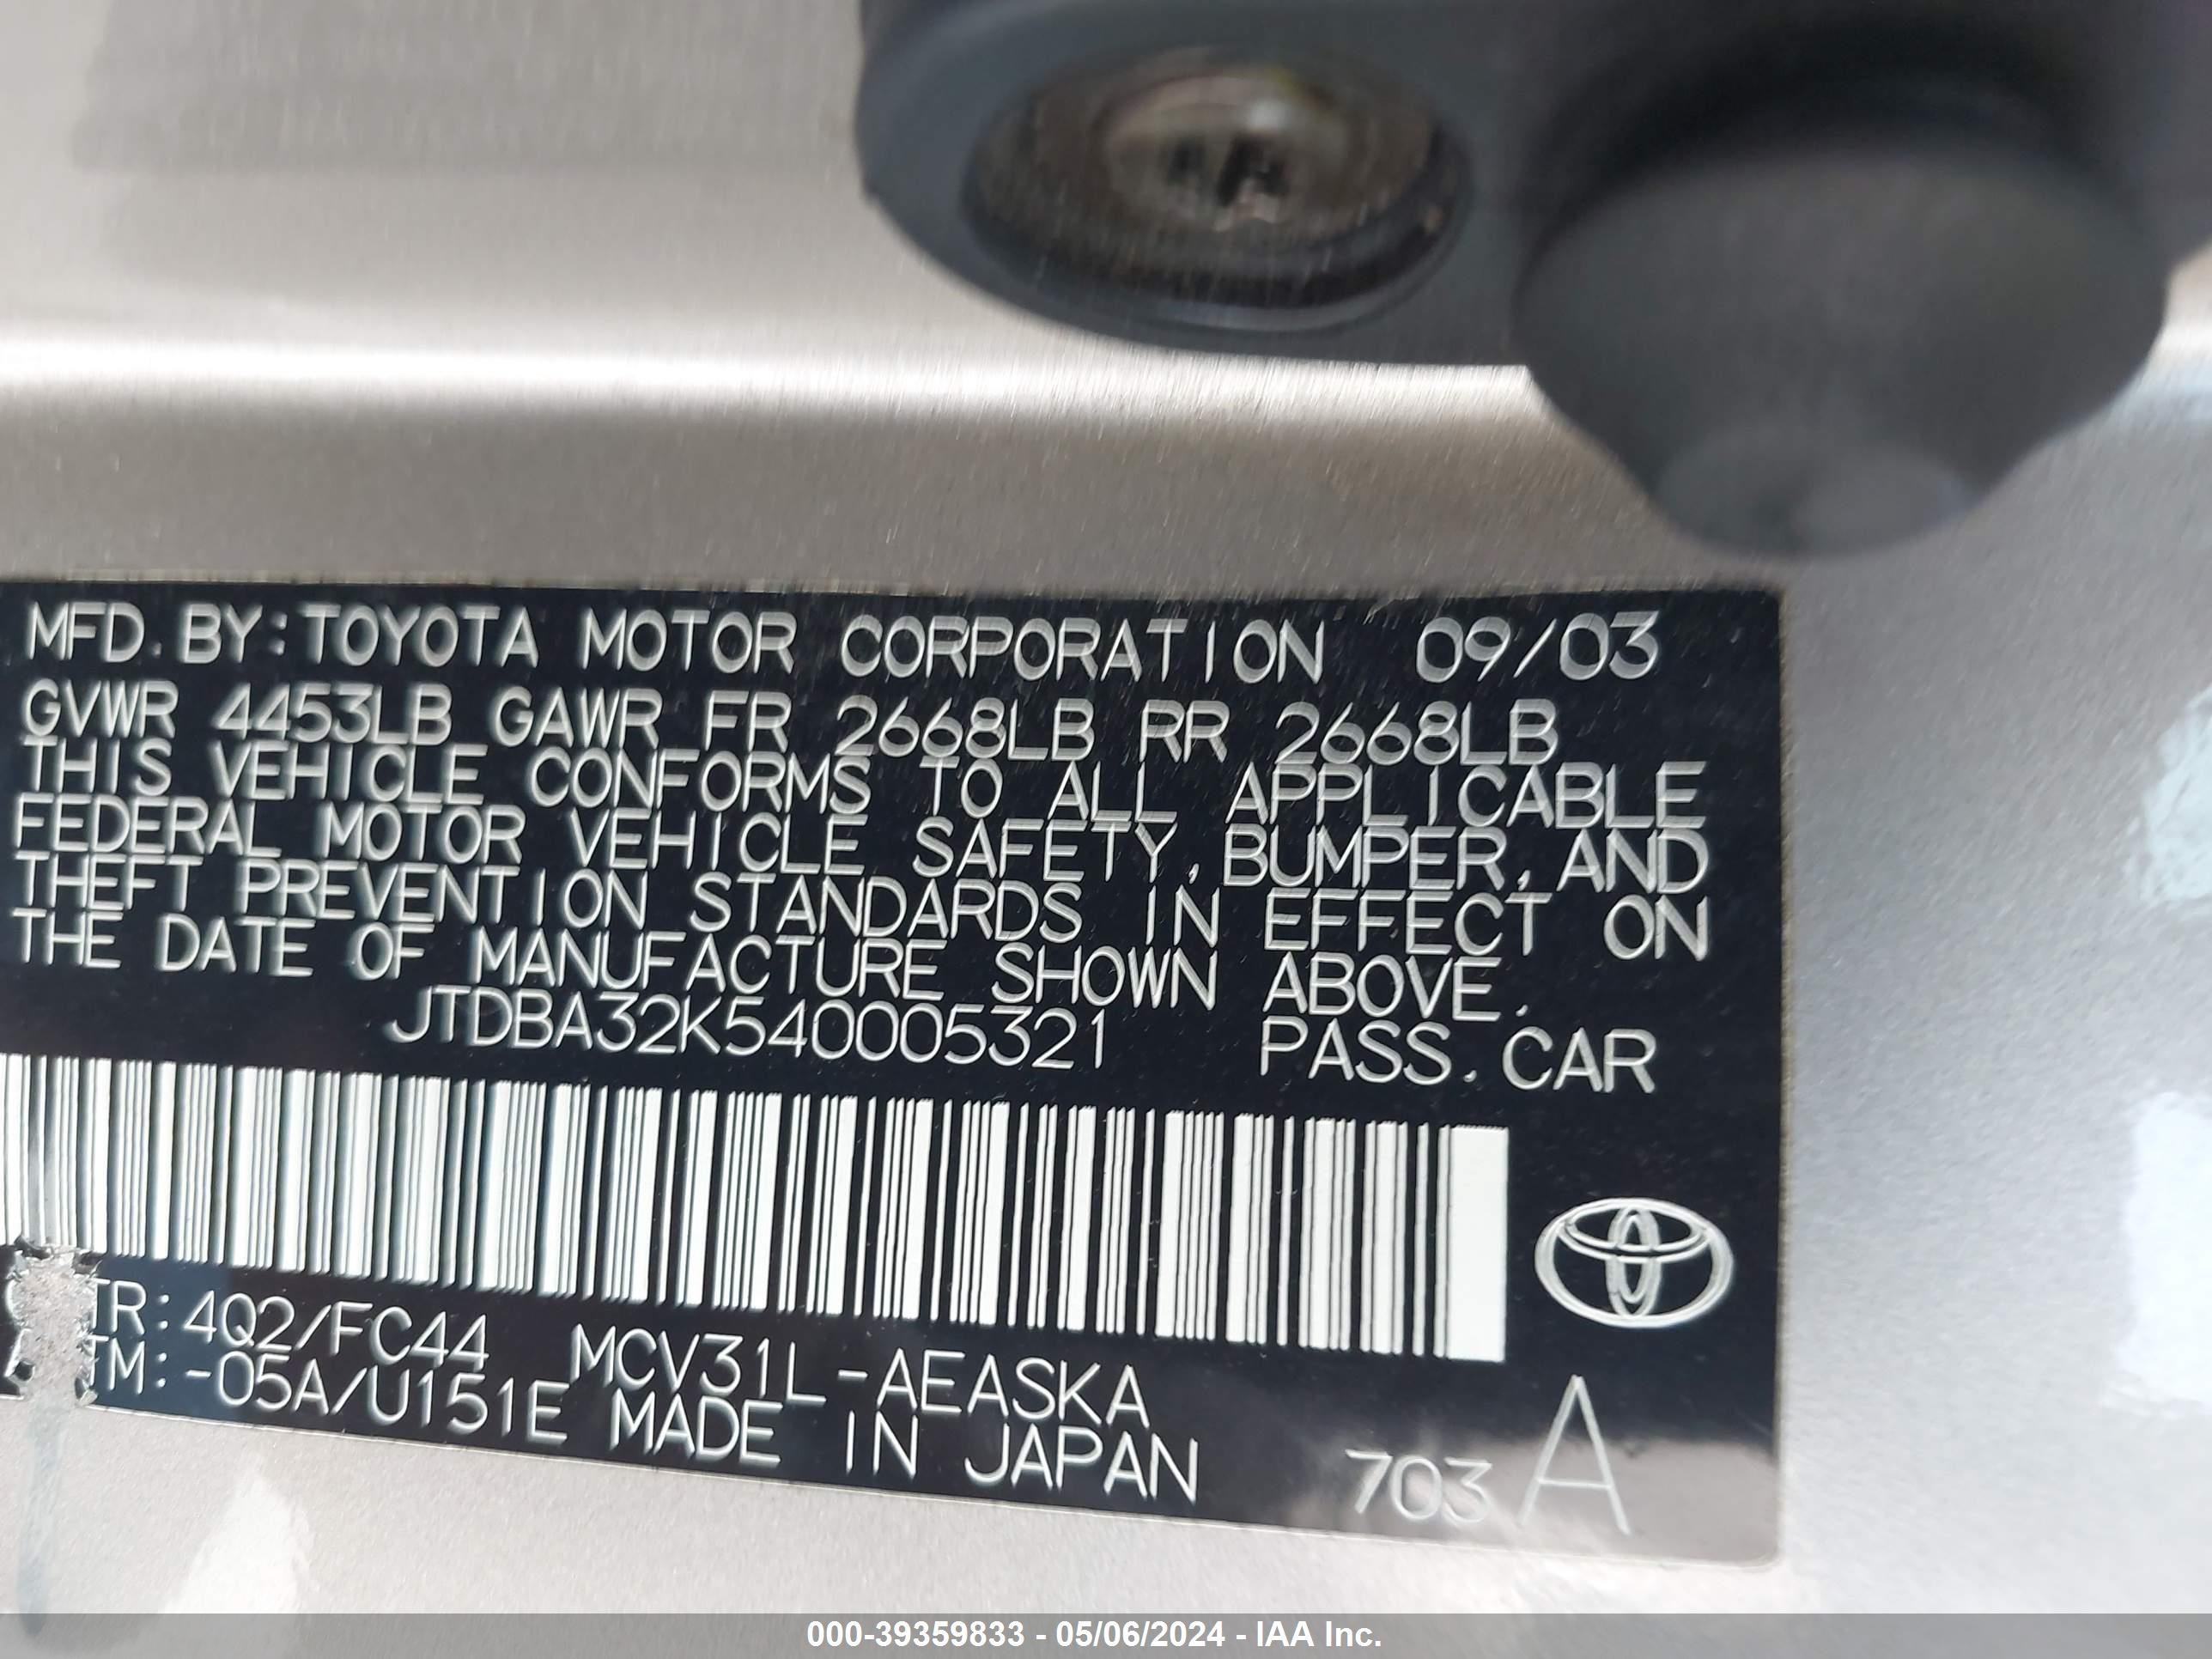 JTDBA32K540005321 2004 Toyota Camry Se V6